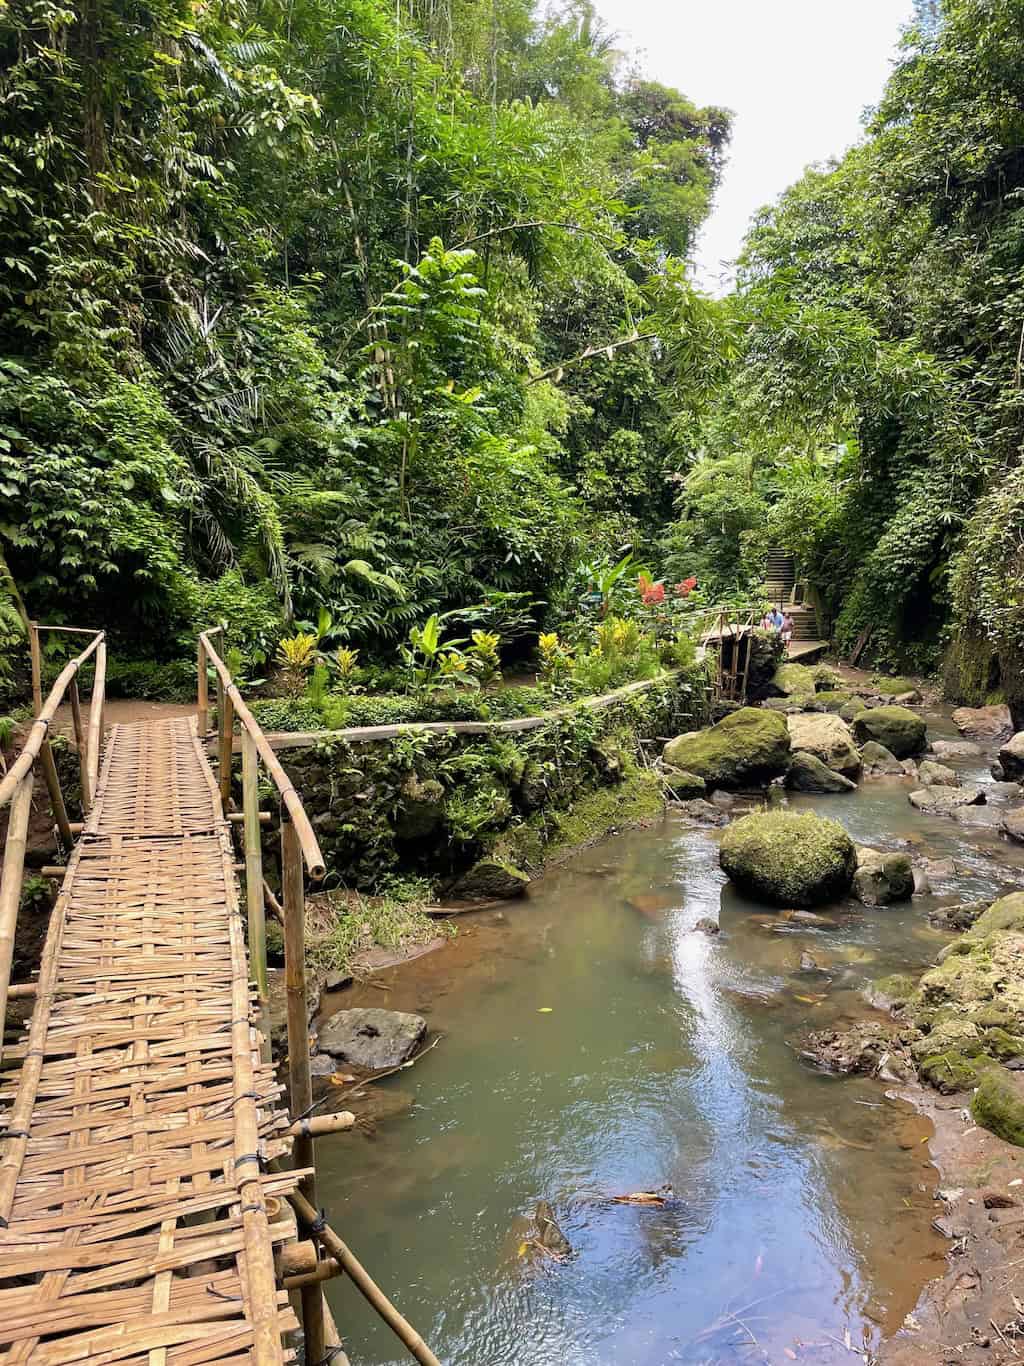 Tibumana Waterfall Bridge over River